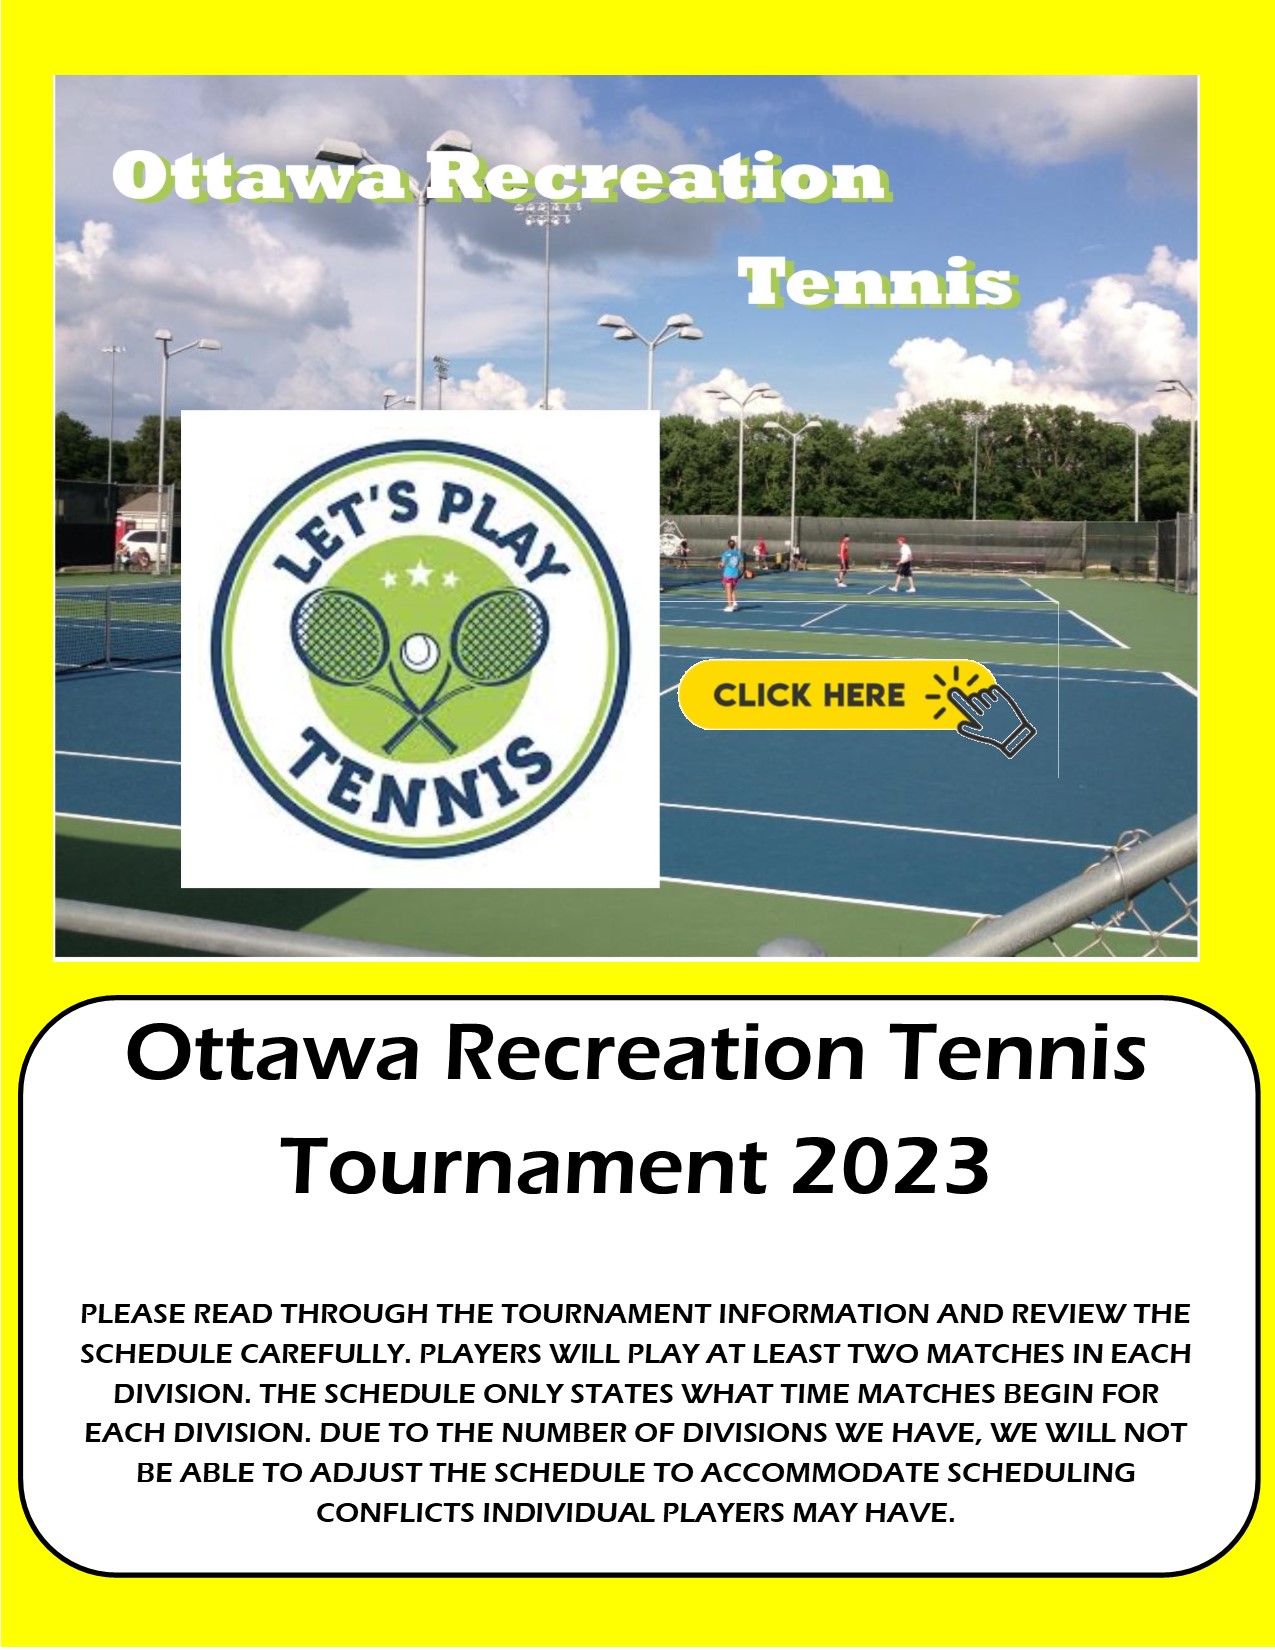 Tennis City of Ottawa Recreation